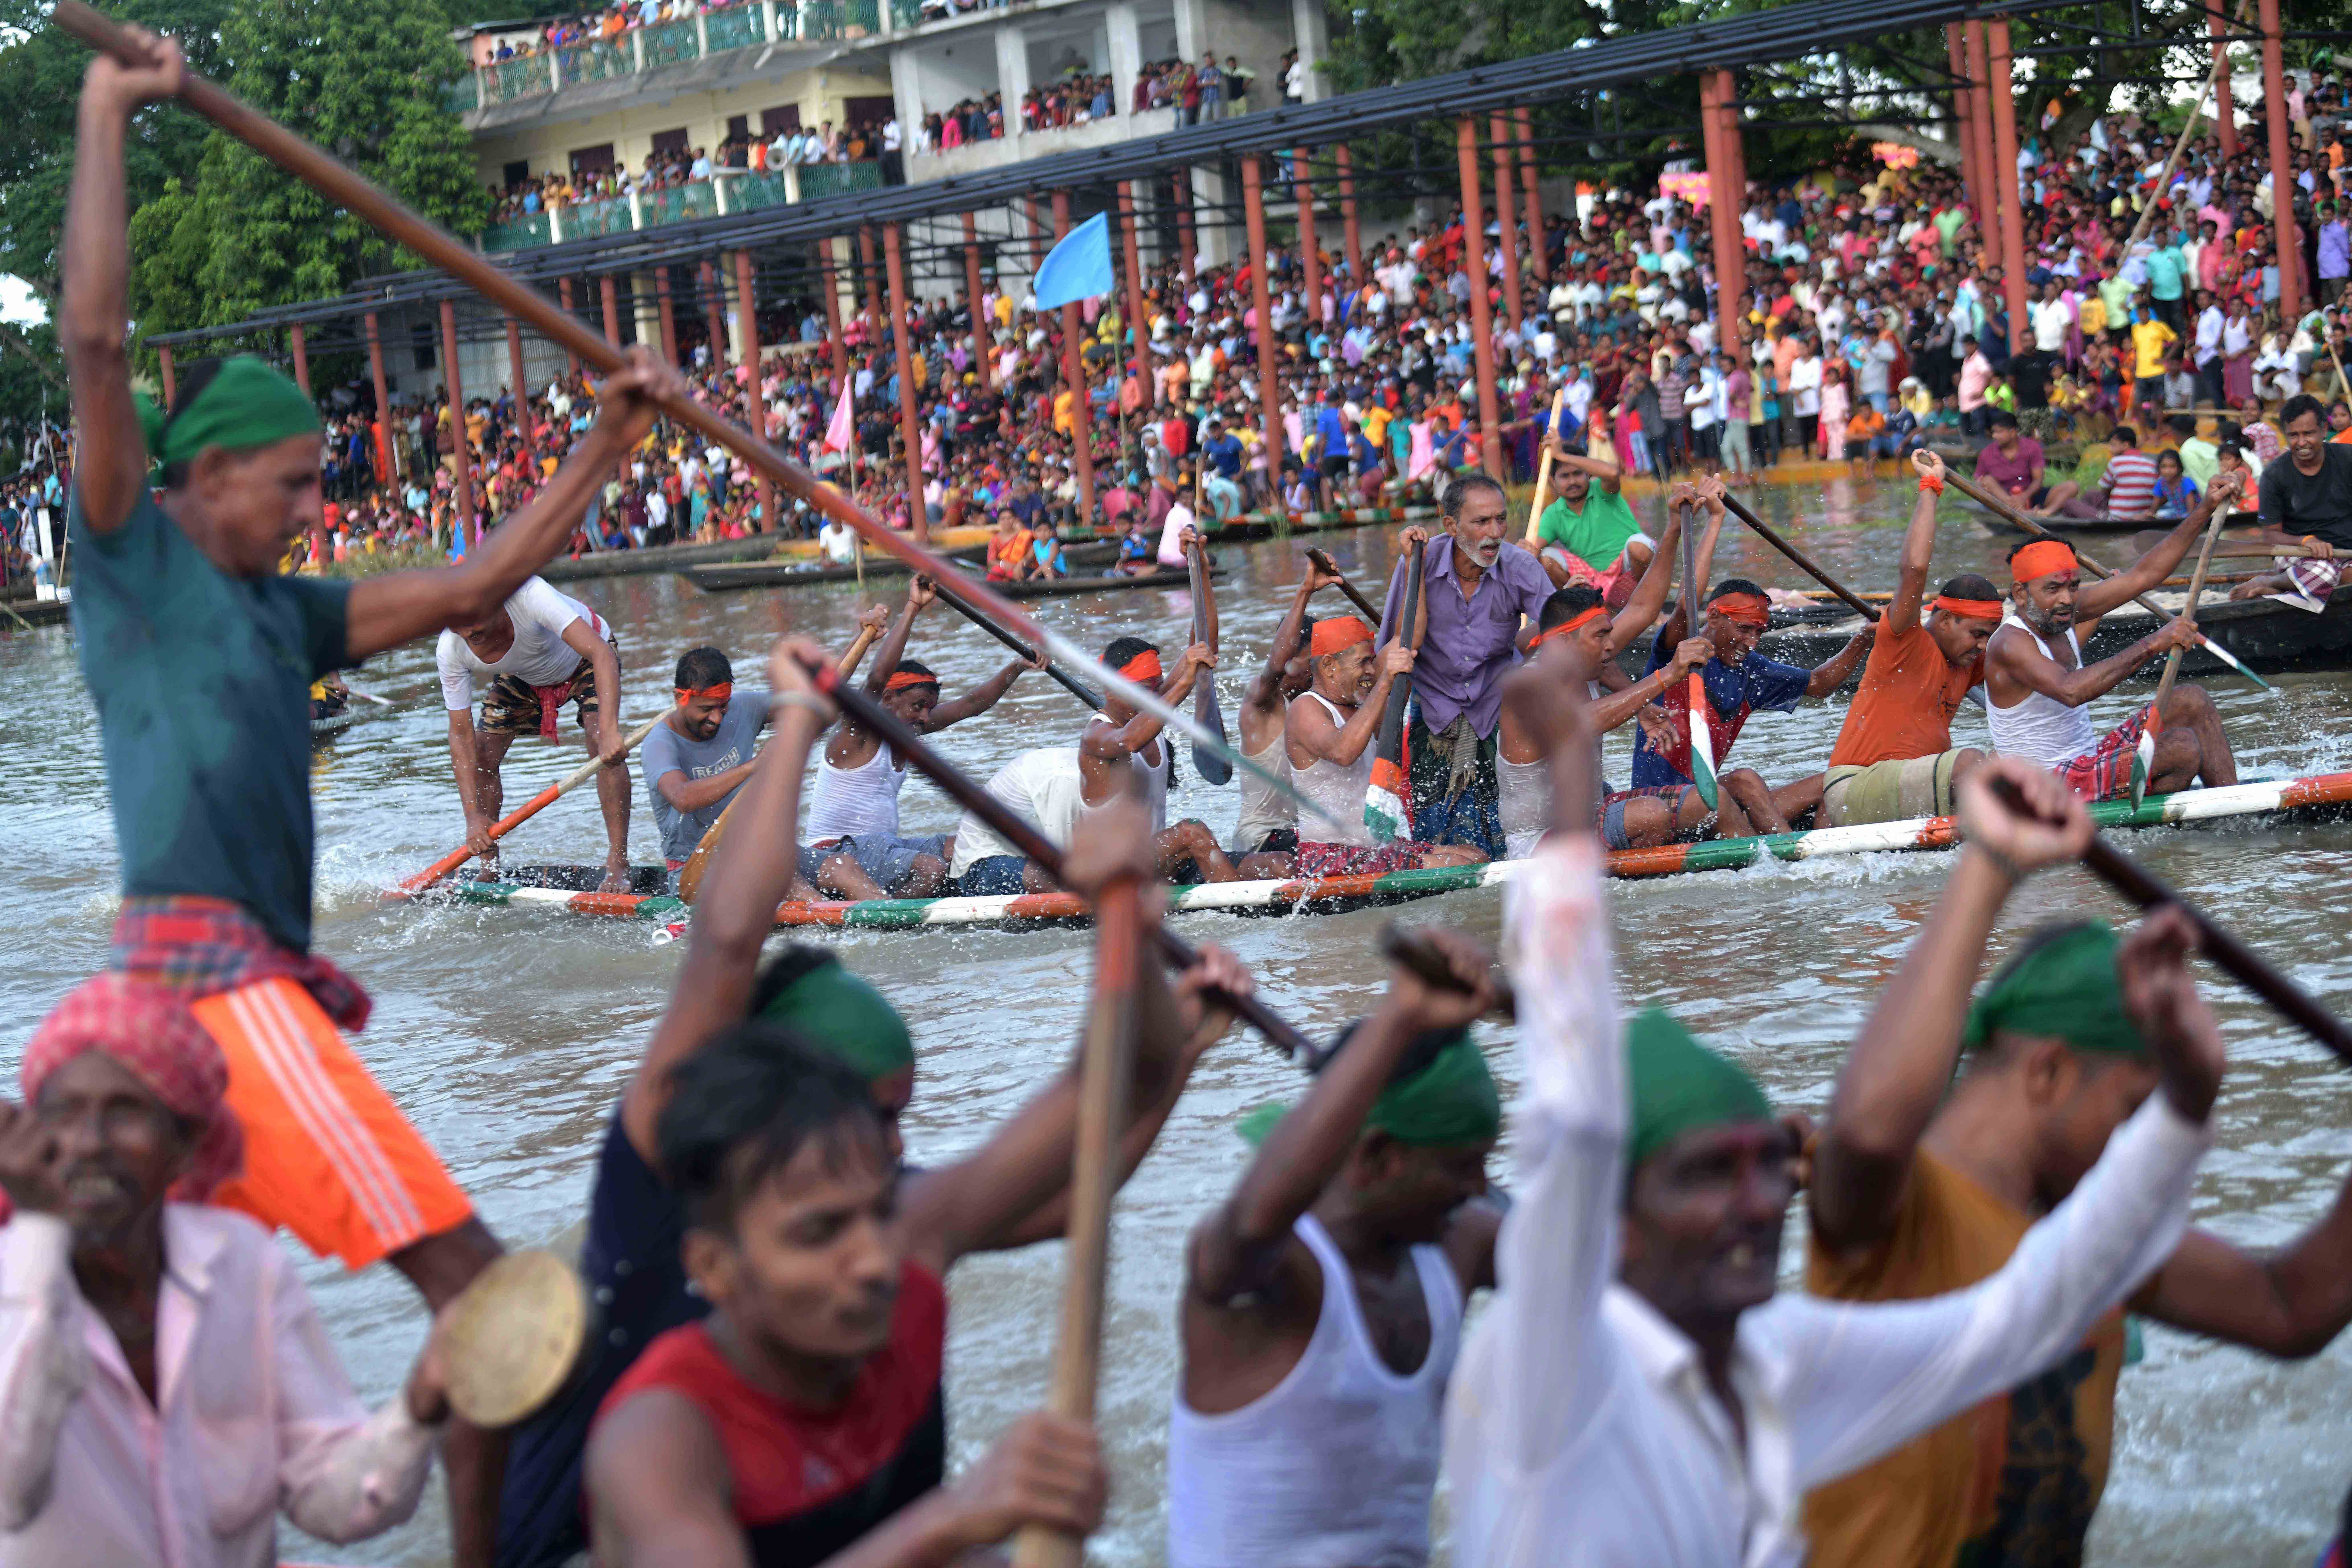 AGARTALA, Penduduk desa berpartisipasi dalam sebuah lomba balap perahu di festival balap perahu tahunan di Danau Rudrasagar, sekitar 55 kilometer dari Agartala, ibu kota Negara Bagian Tripura, India timur laut, pada 12 September 2022. (Xinhua/Str)